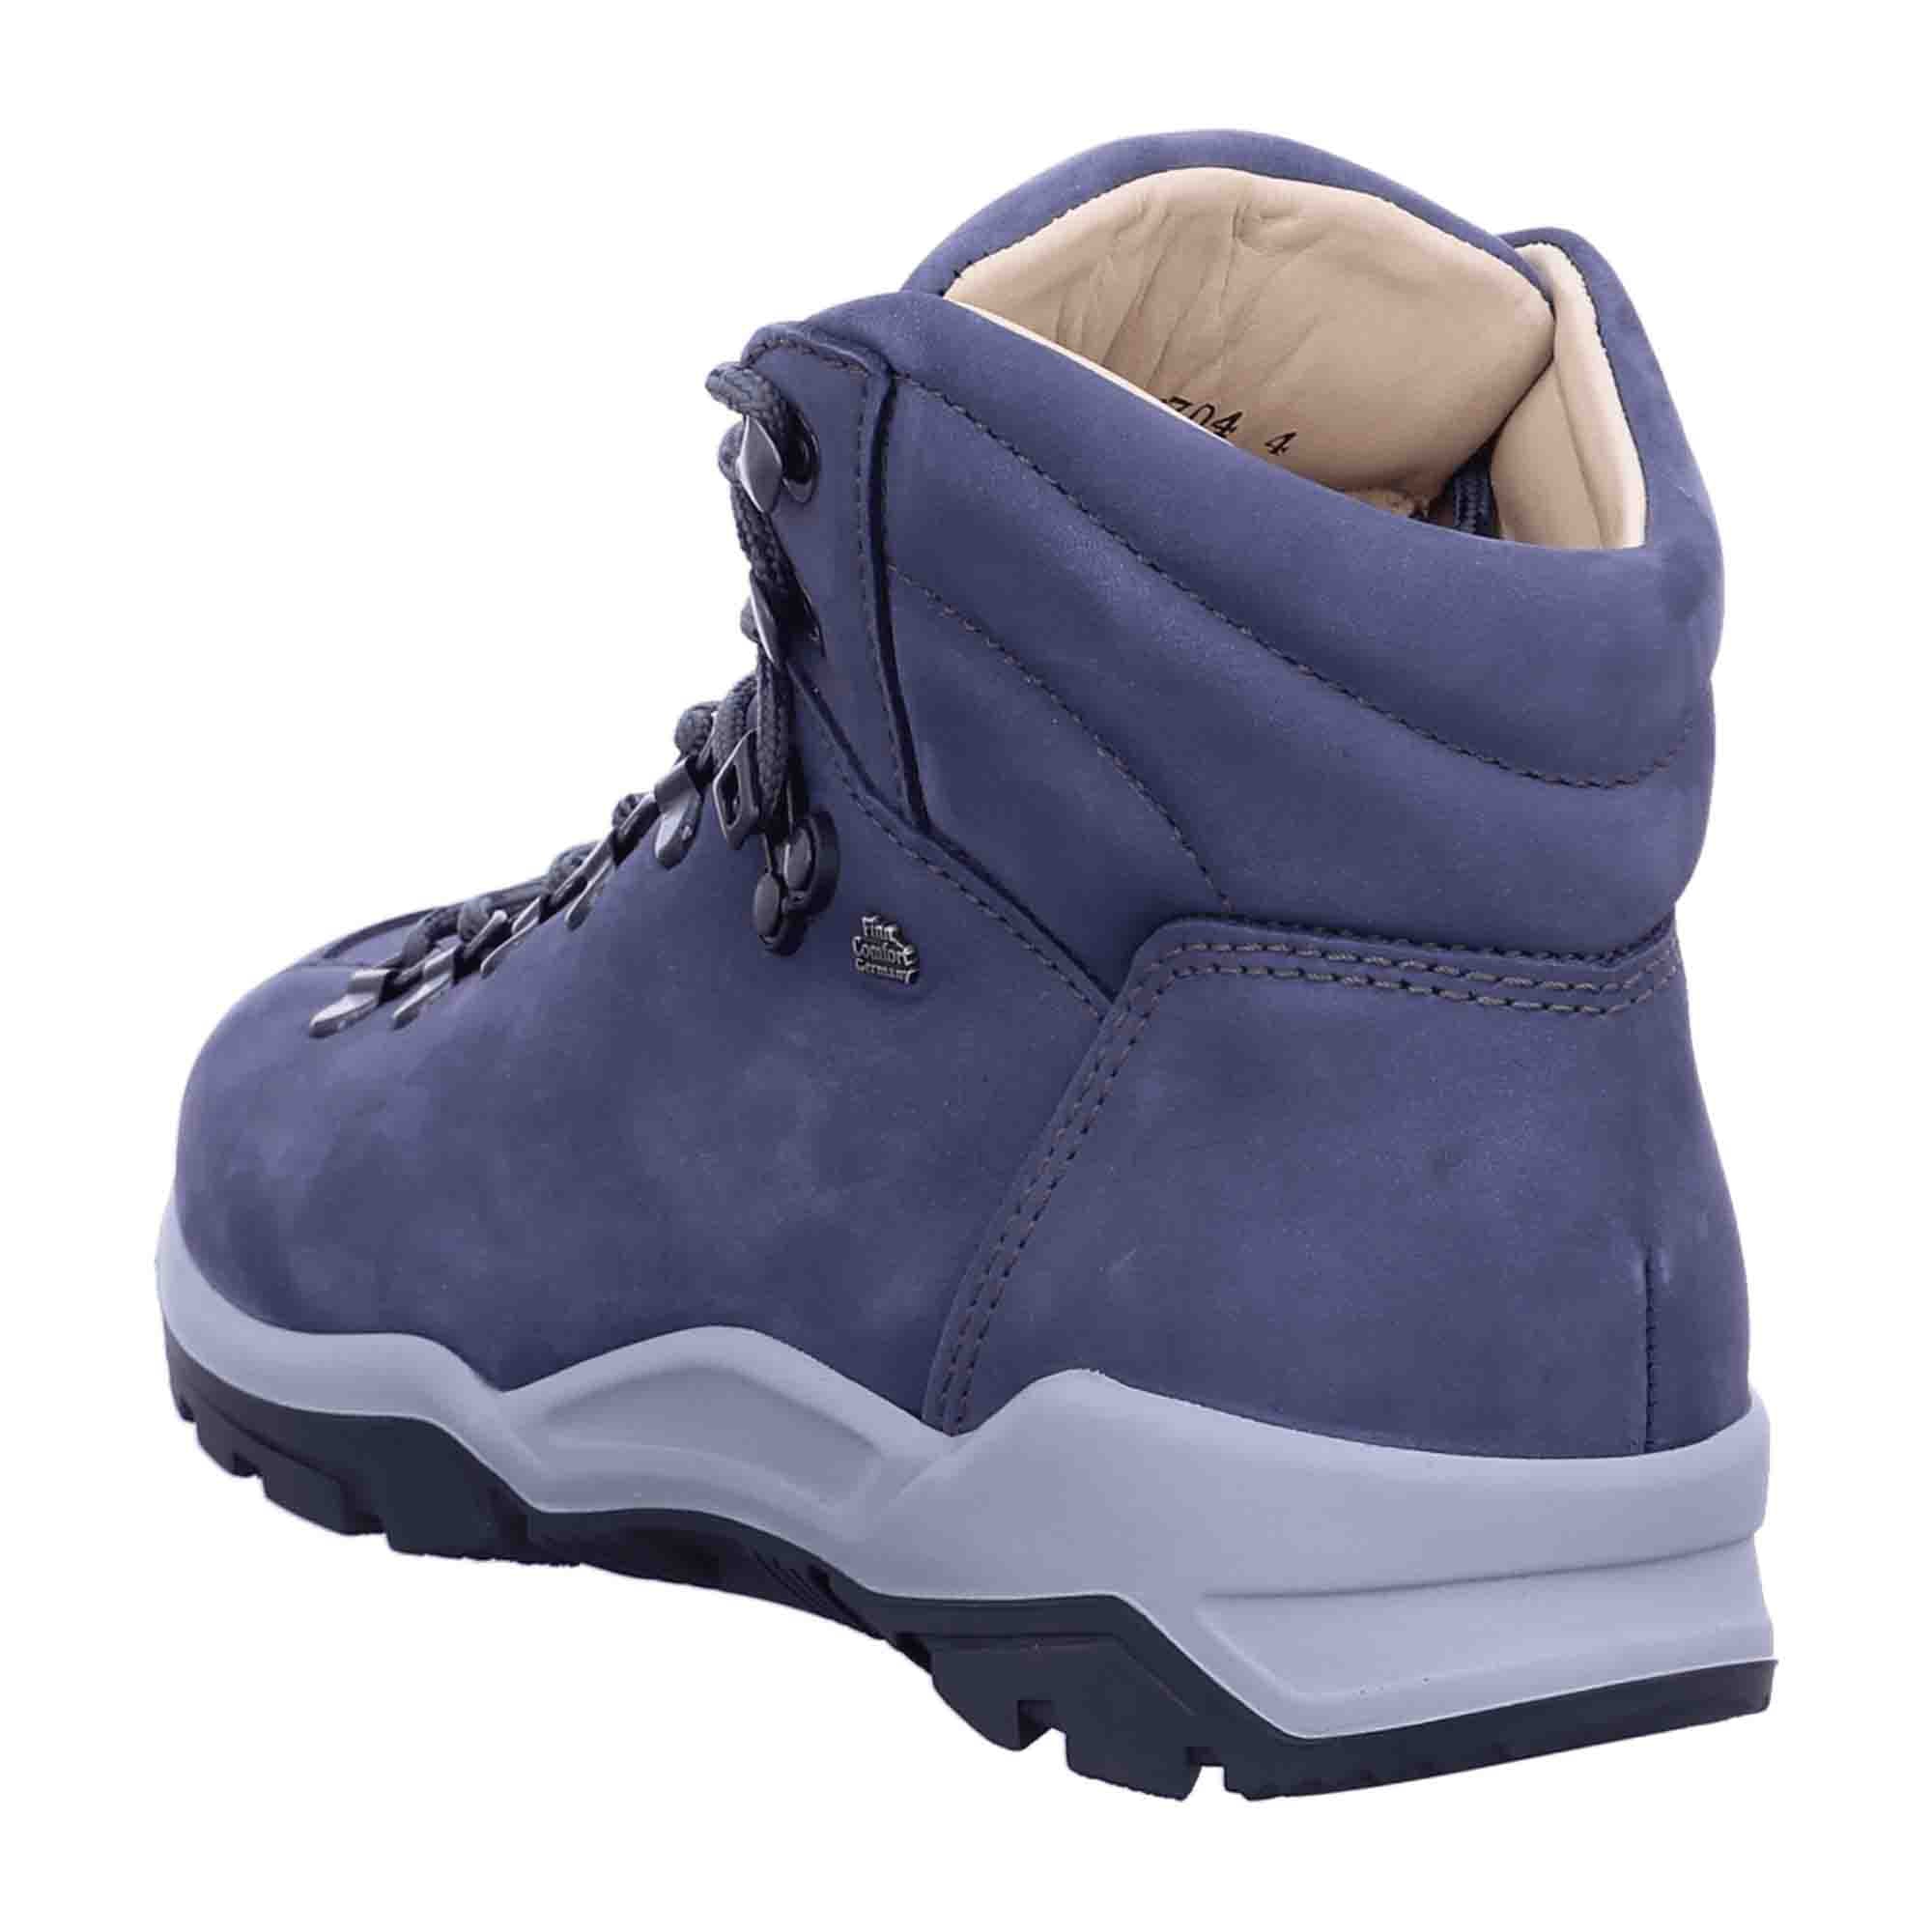 Finn Comfort Garmisch Women's Hiking Boots - Marine Blue Nubuck Leather, Orthopedic Support